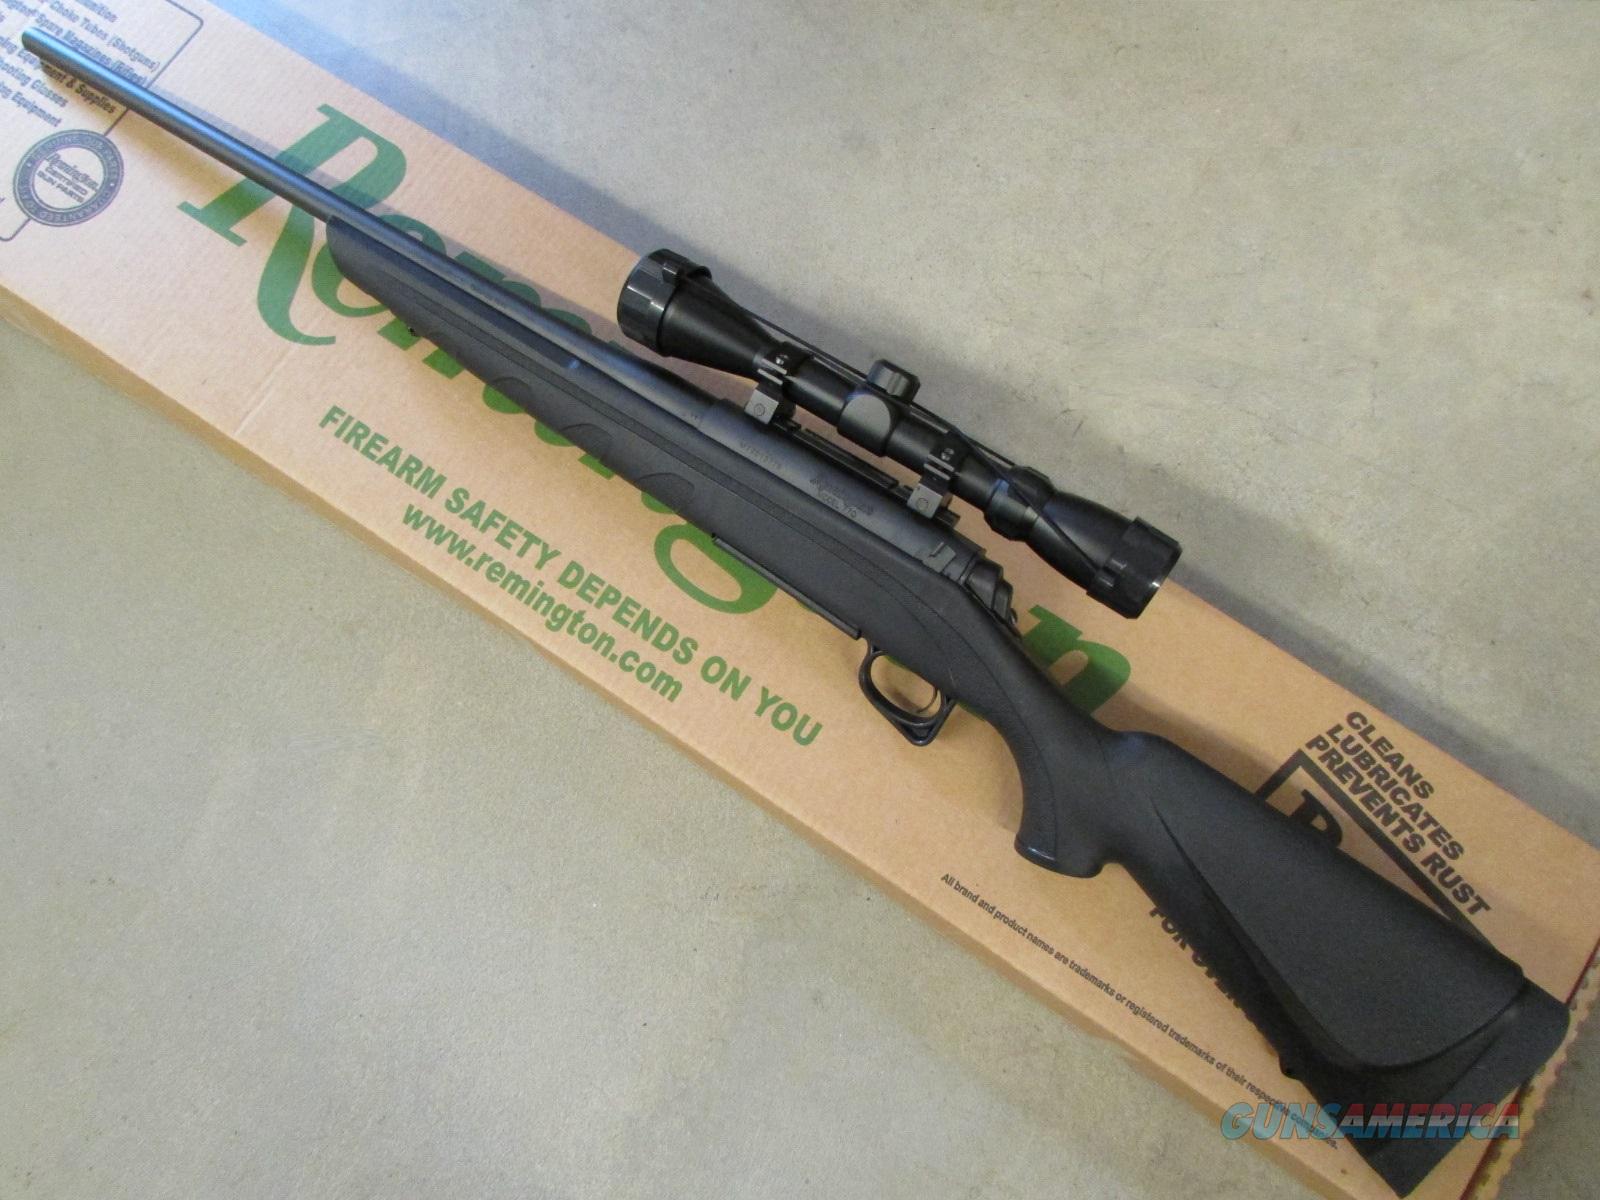 7mm-08 remington rifle